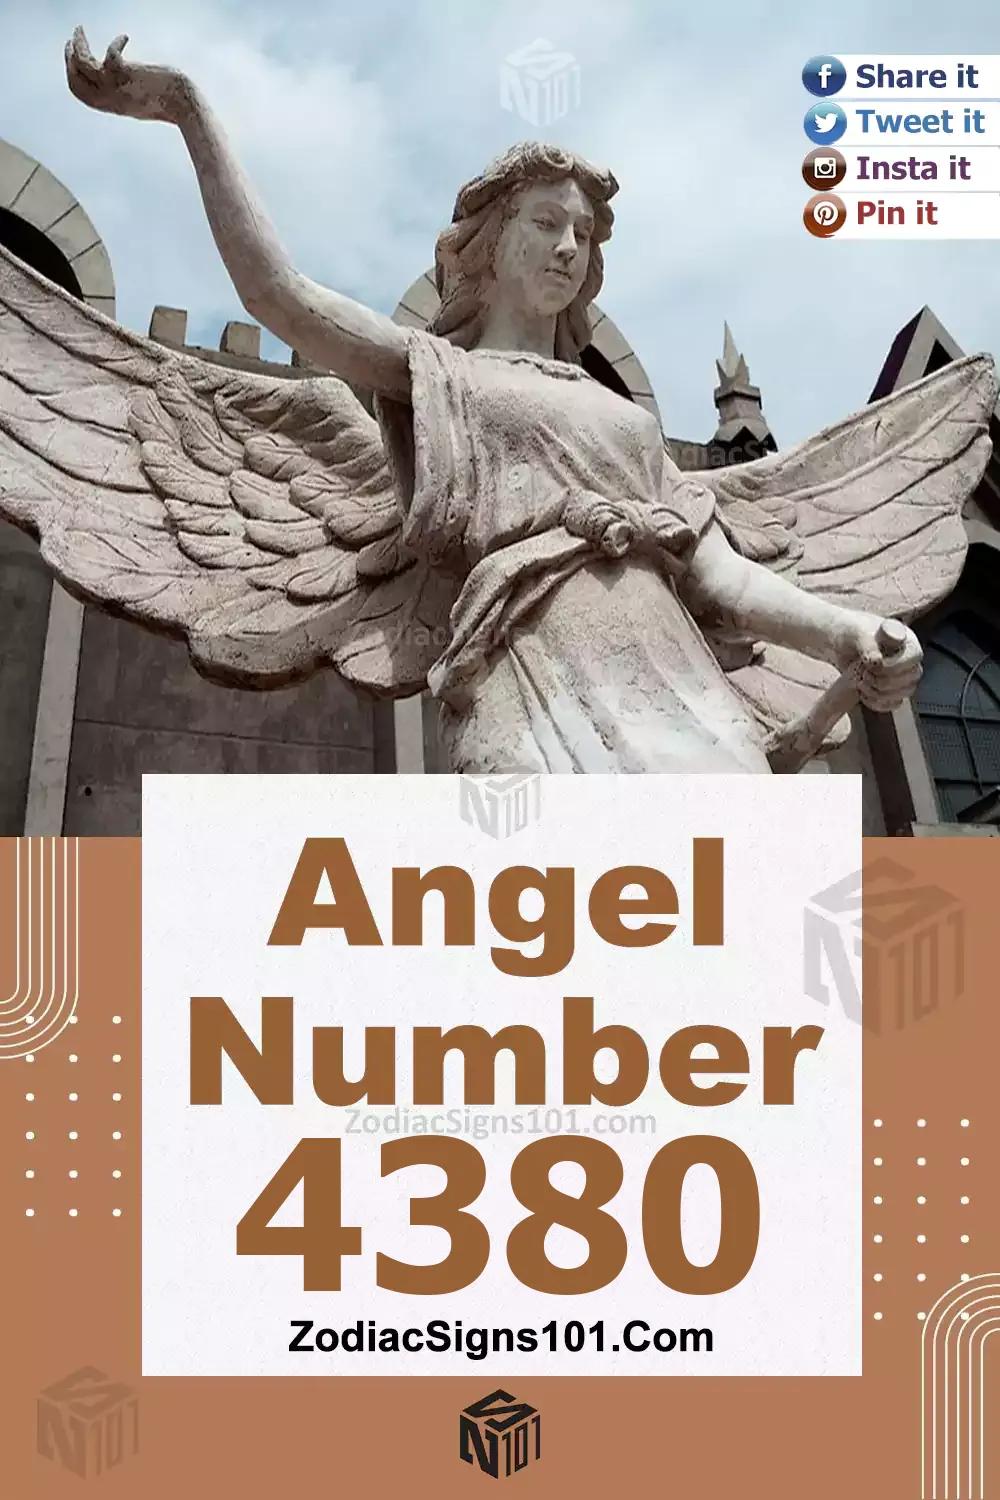 4380-Angel-Number-Meaning.jpg